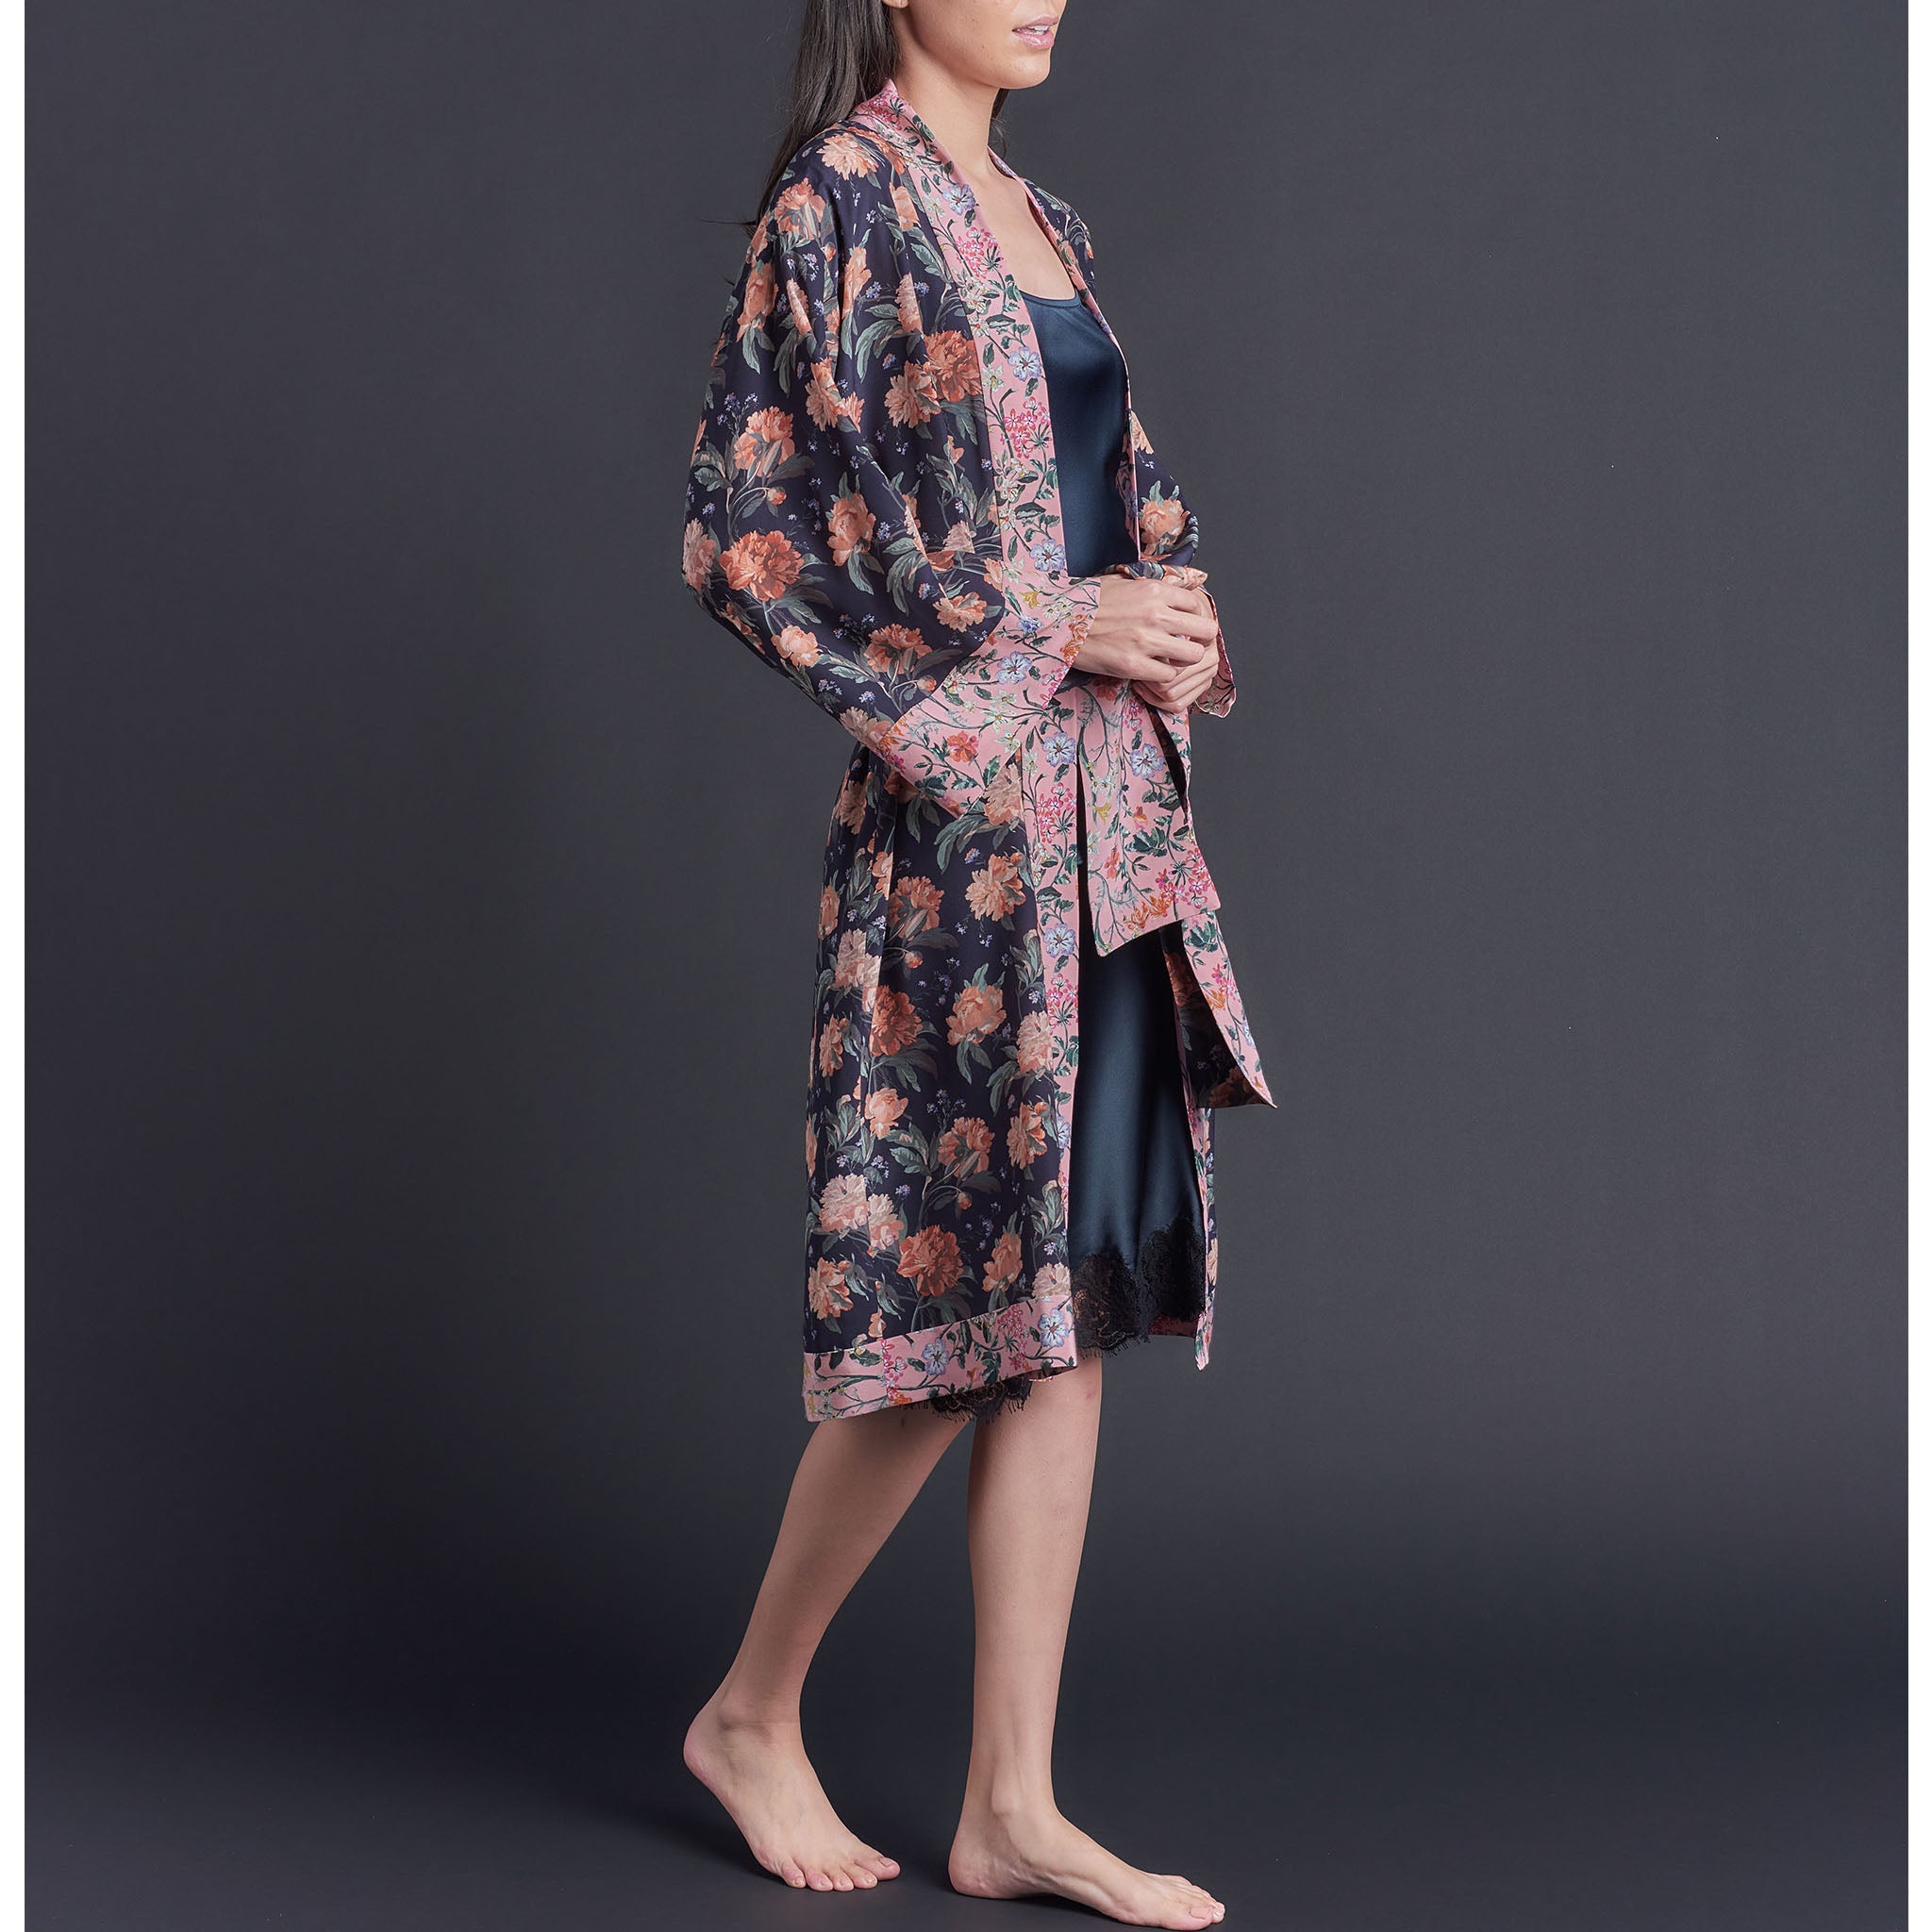 Selene Knee Length Robe in Decadent Dreams Liberty Print Silk Crepe De Chine